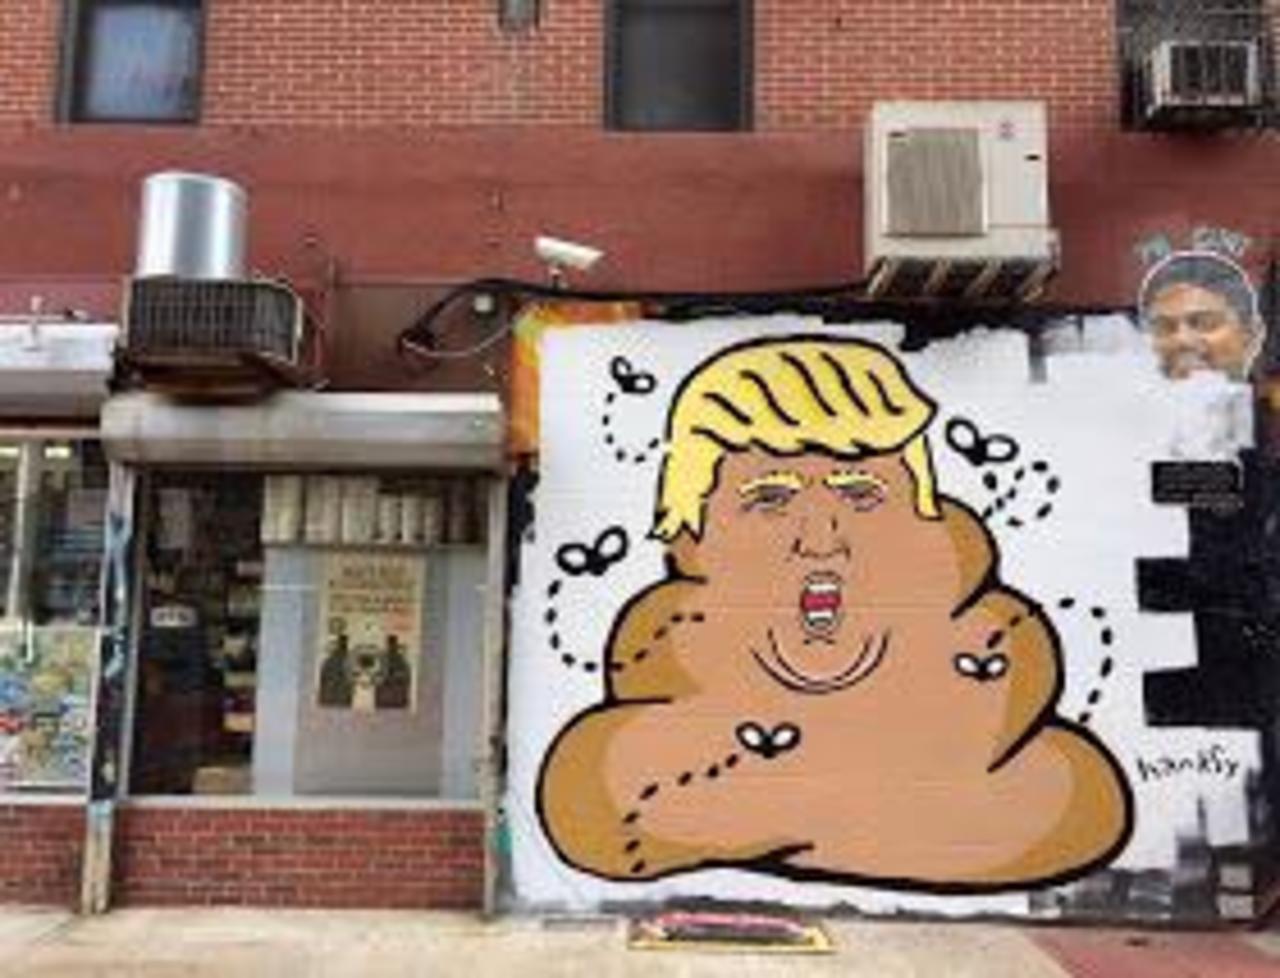 RT @richardbanfa: New #streetart Hanksy paints a piece of shit in #nyc #USA #switch #bedifferent #graffiti #arte #art http://t.co/3b7sIt7nXS